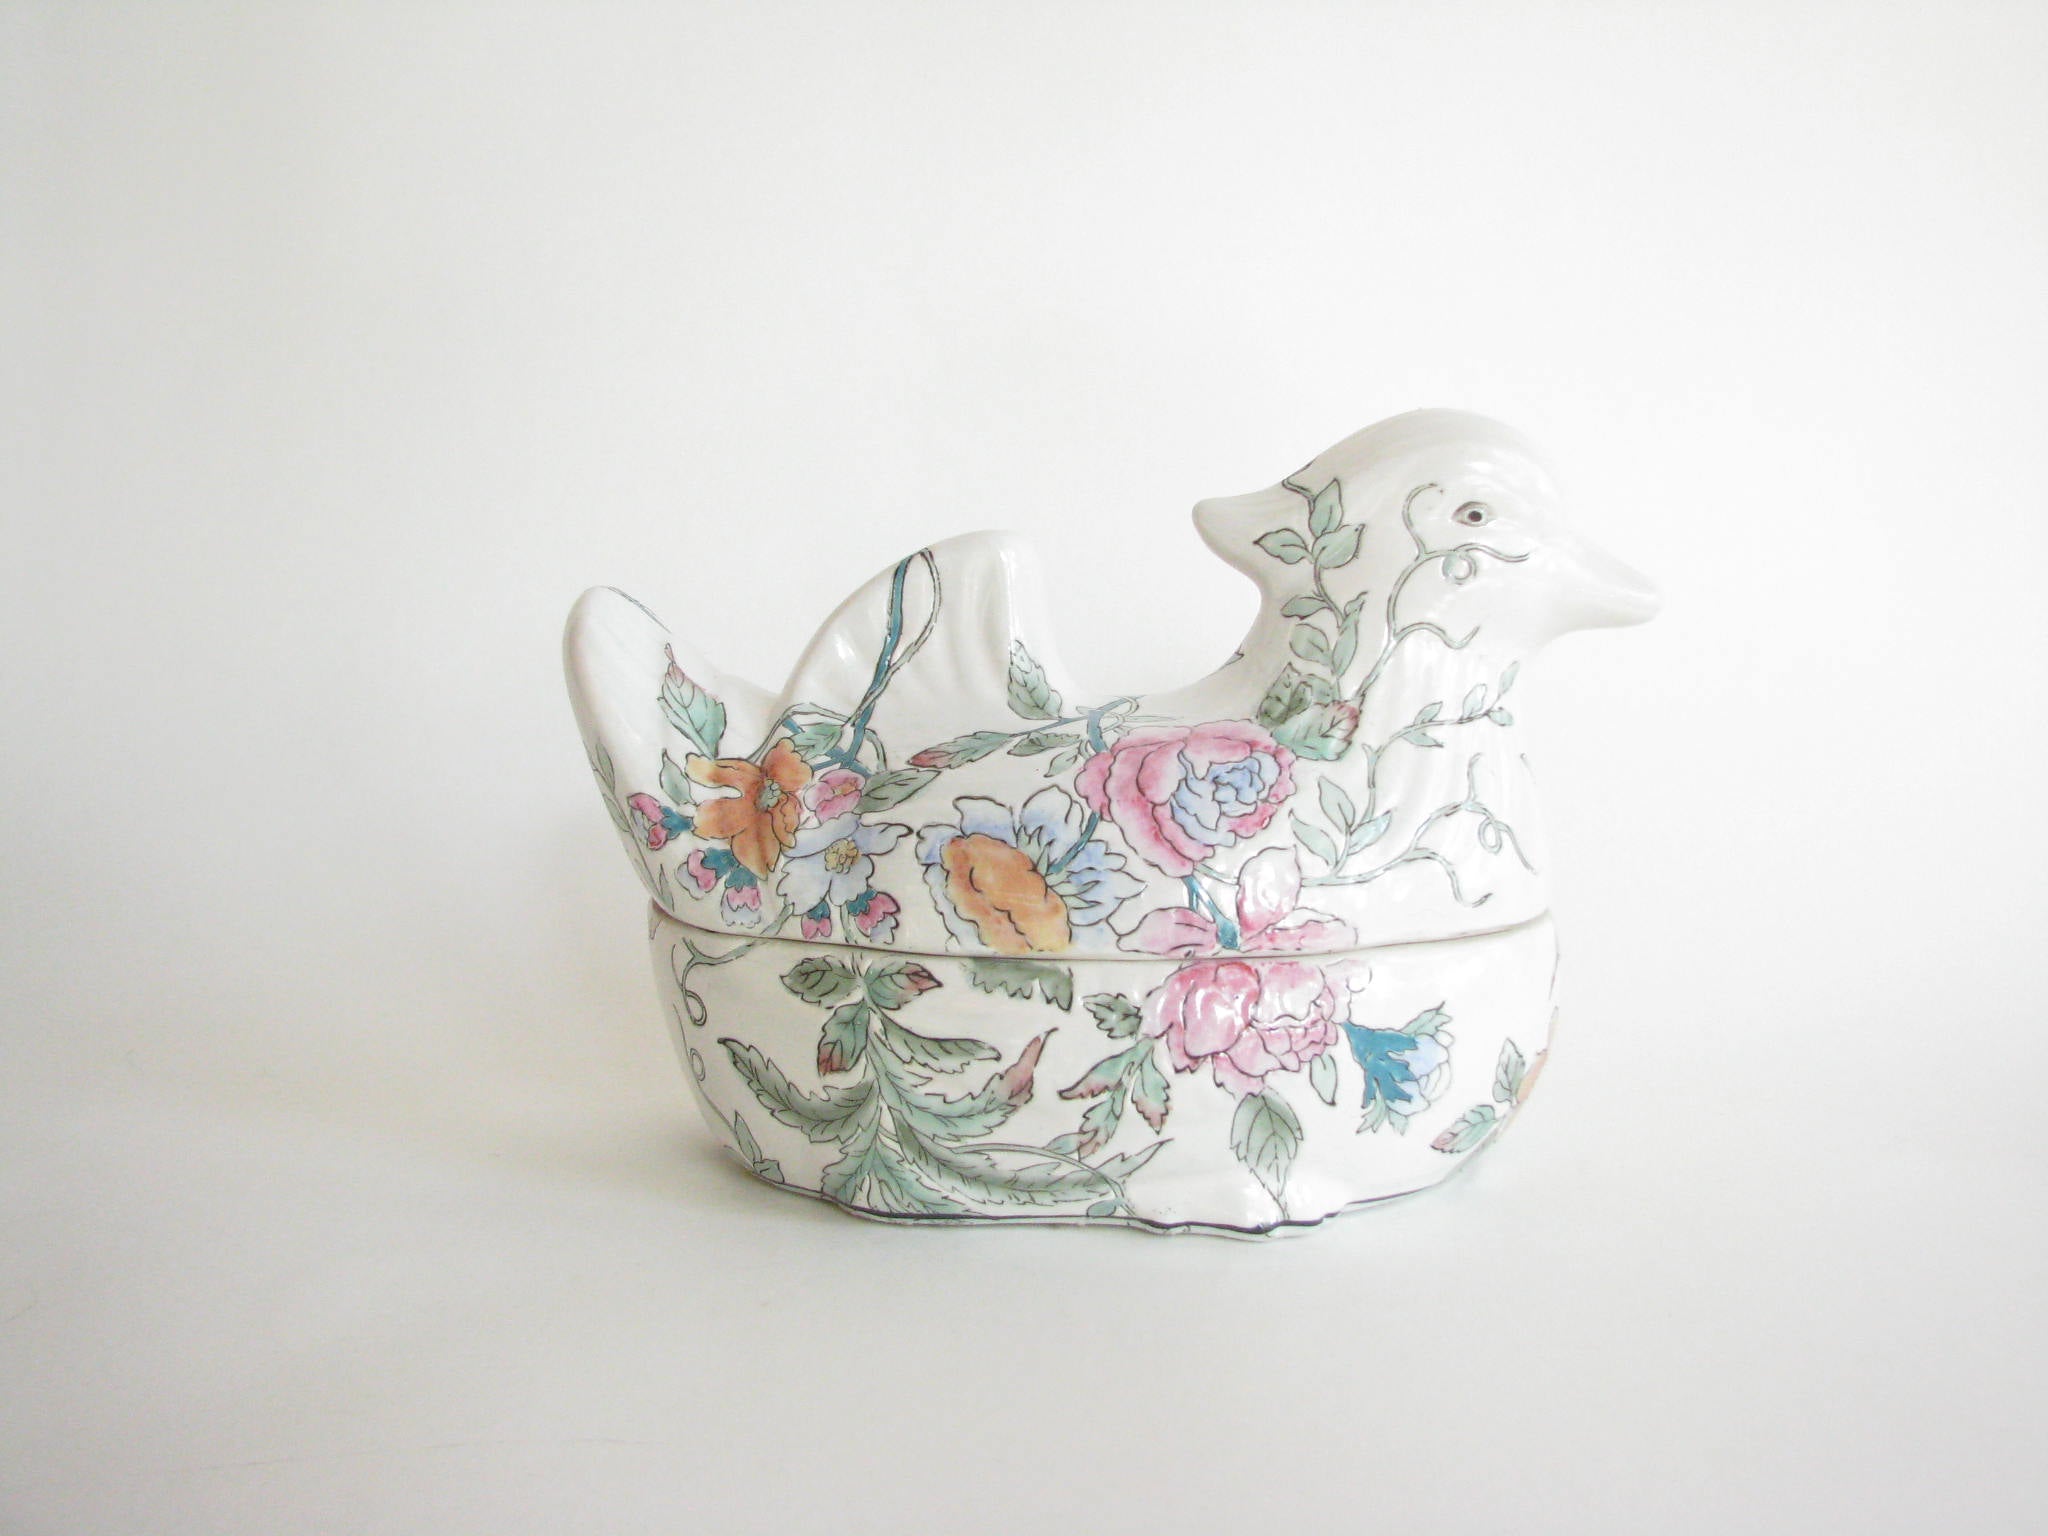 edgebrookhouse - Vintage Japanese Mallard Duck Porcelain Lidded Serving Dish or Tureen with Floral Design